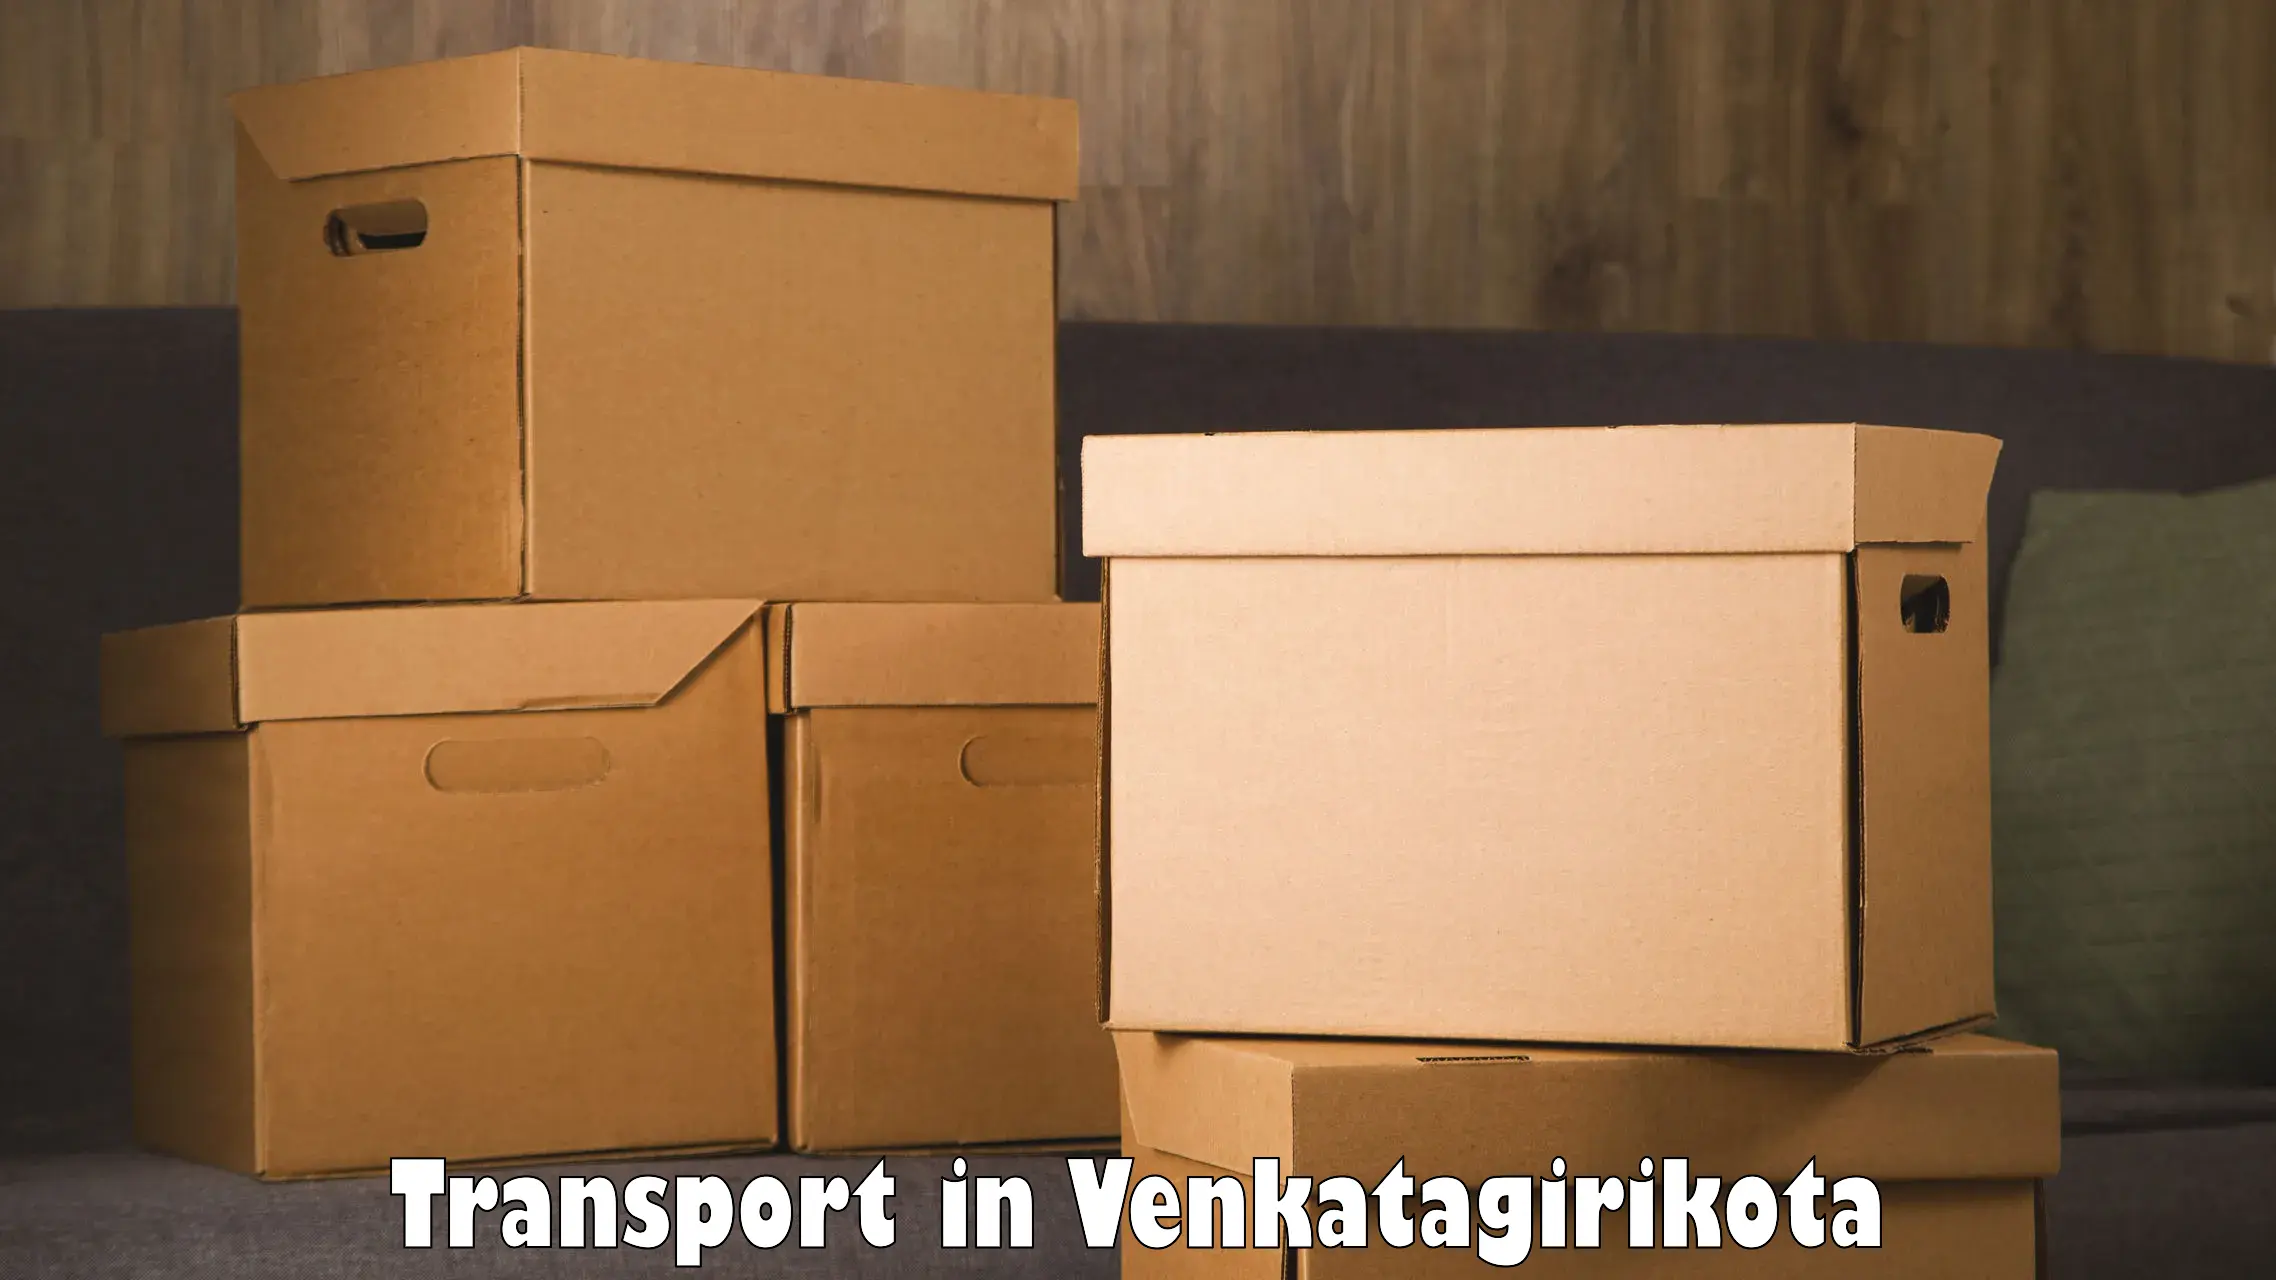 Vehicle transport services in Venkatagirikota